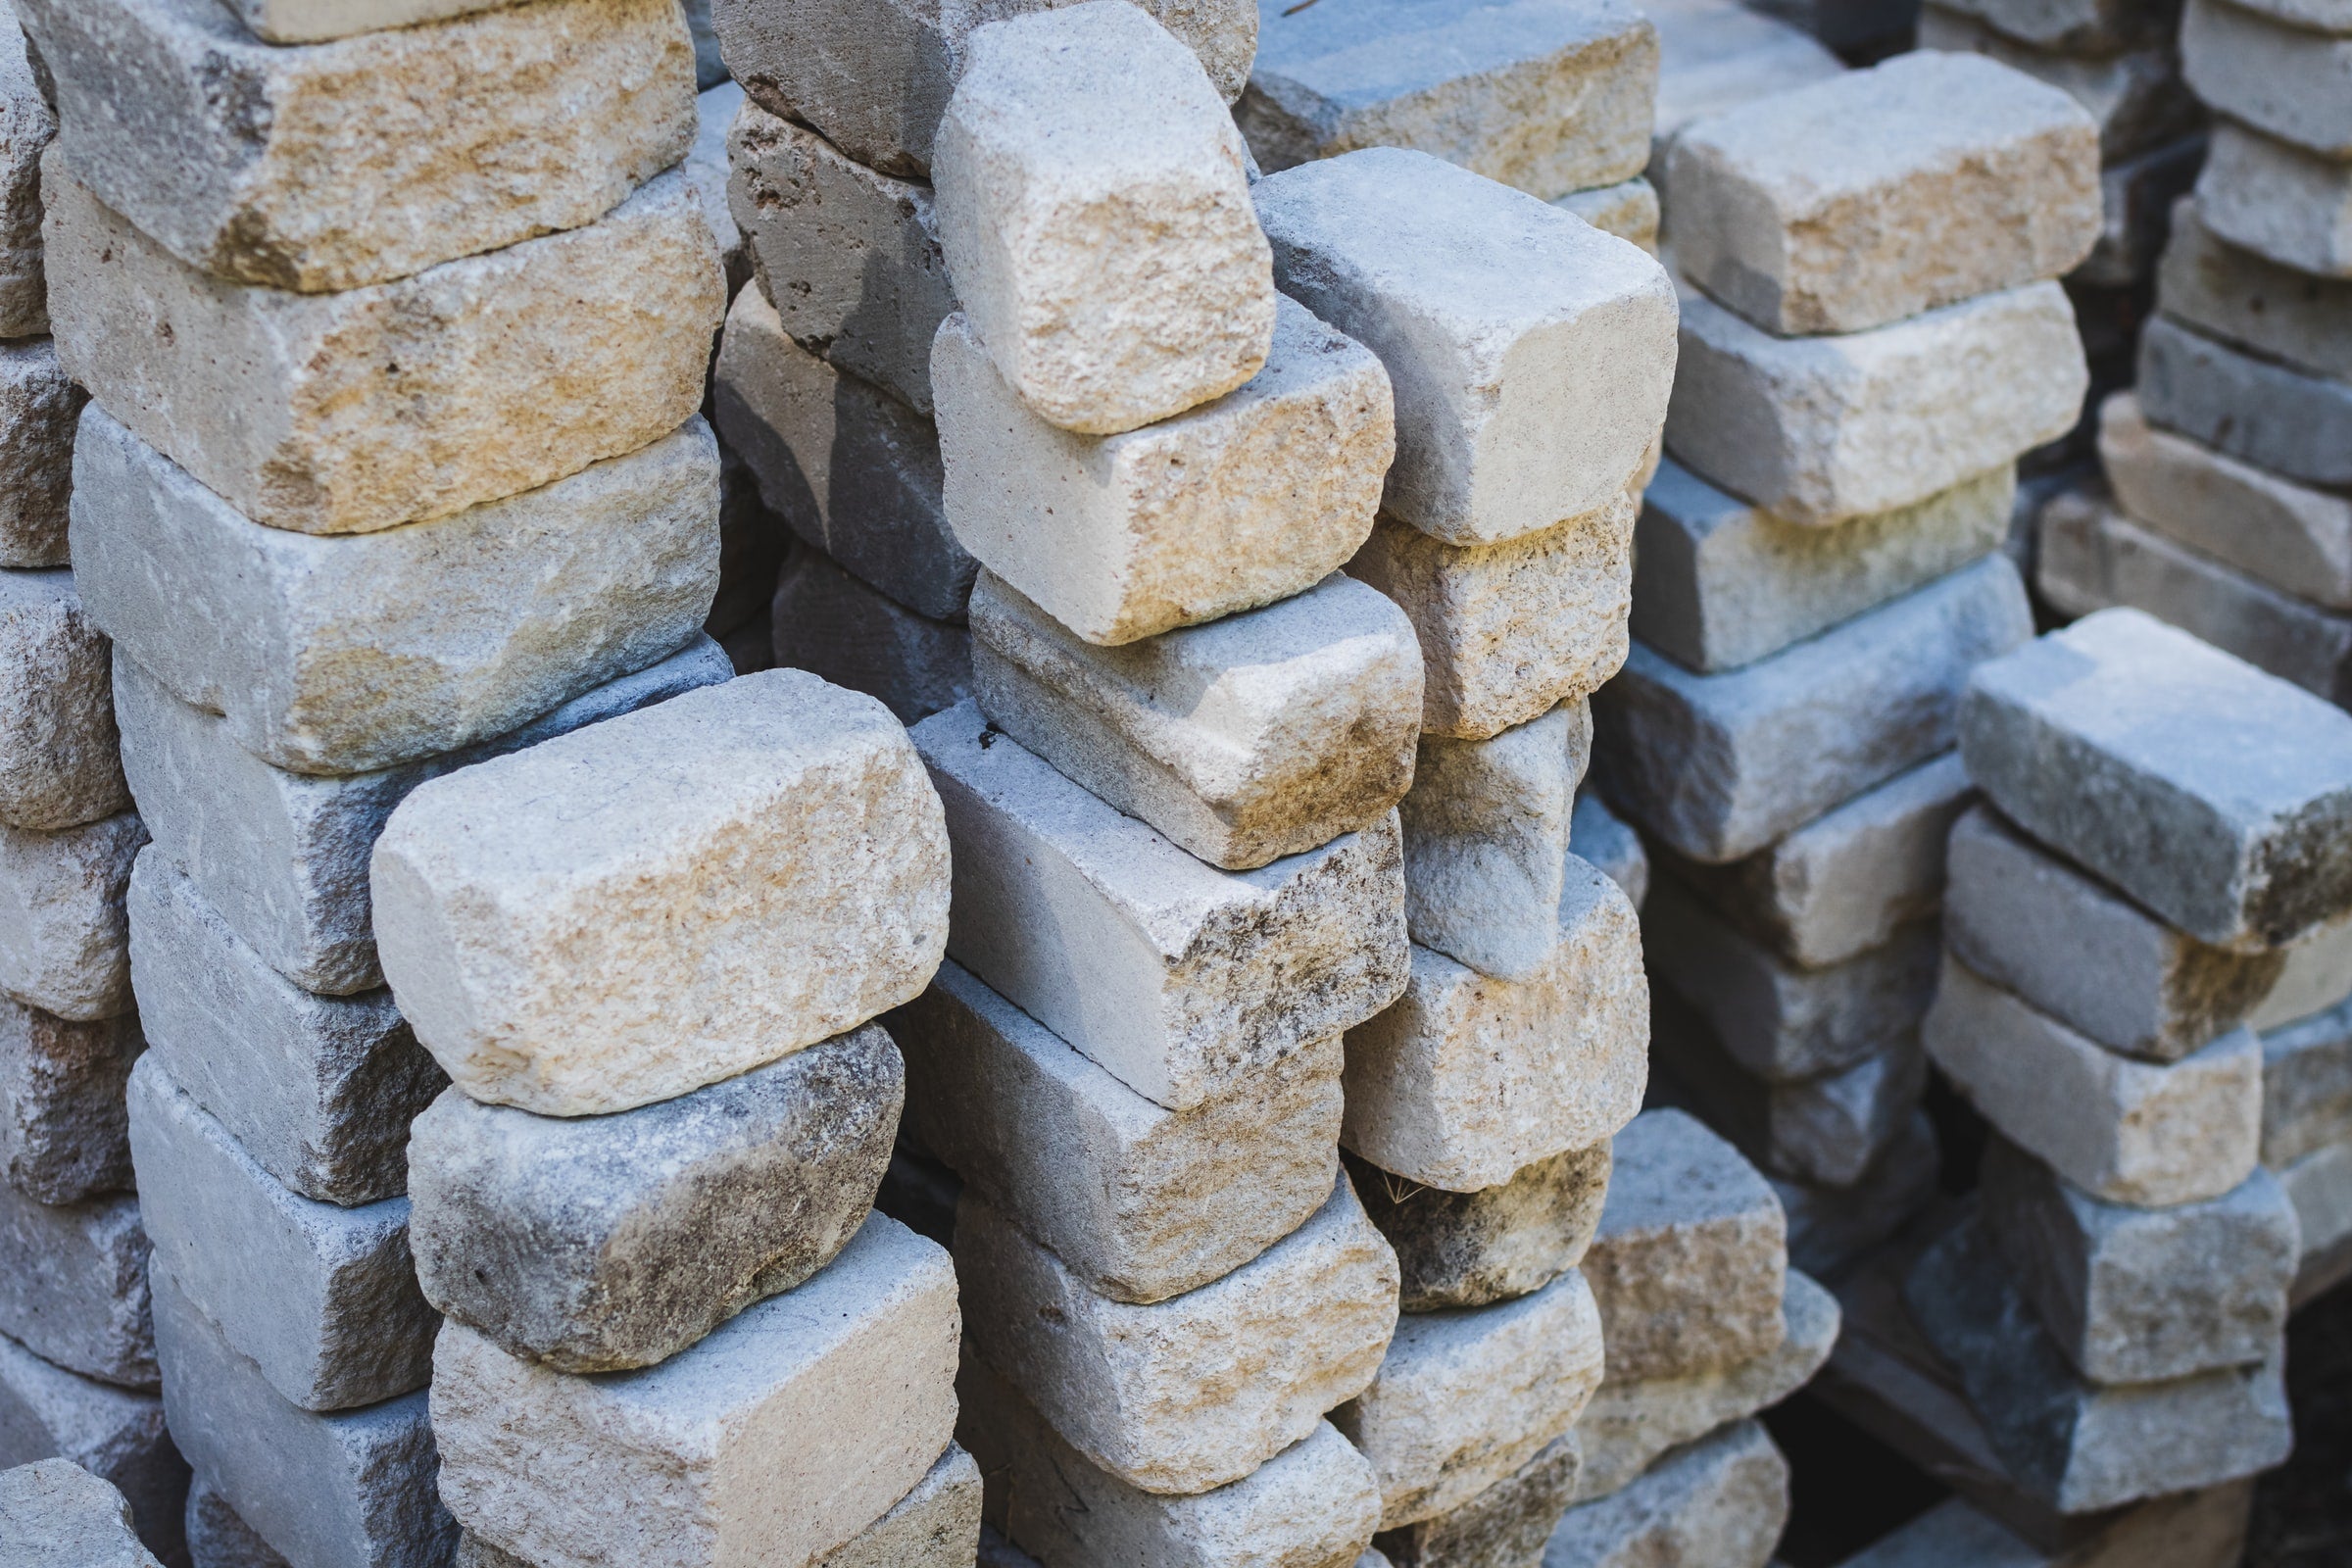 Stacks of building stones